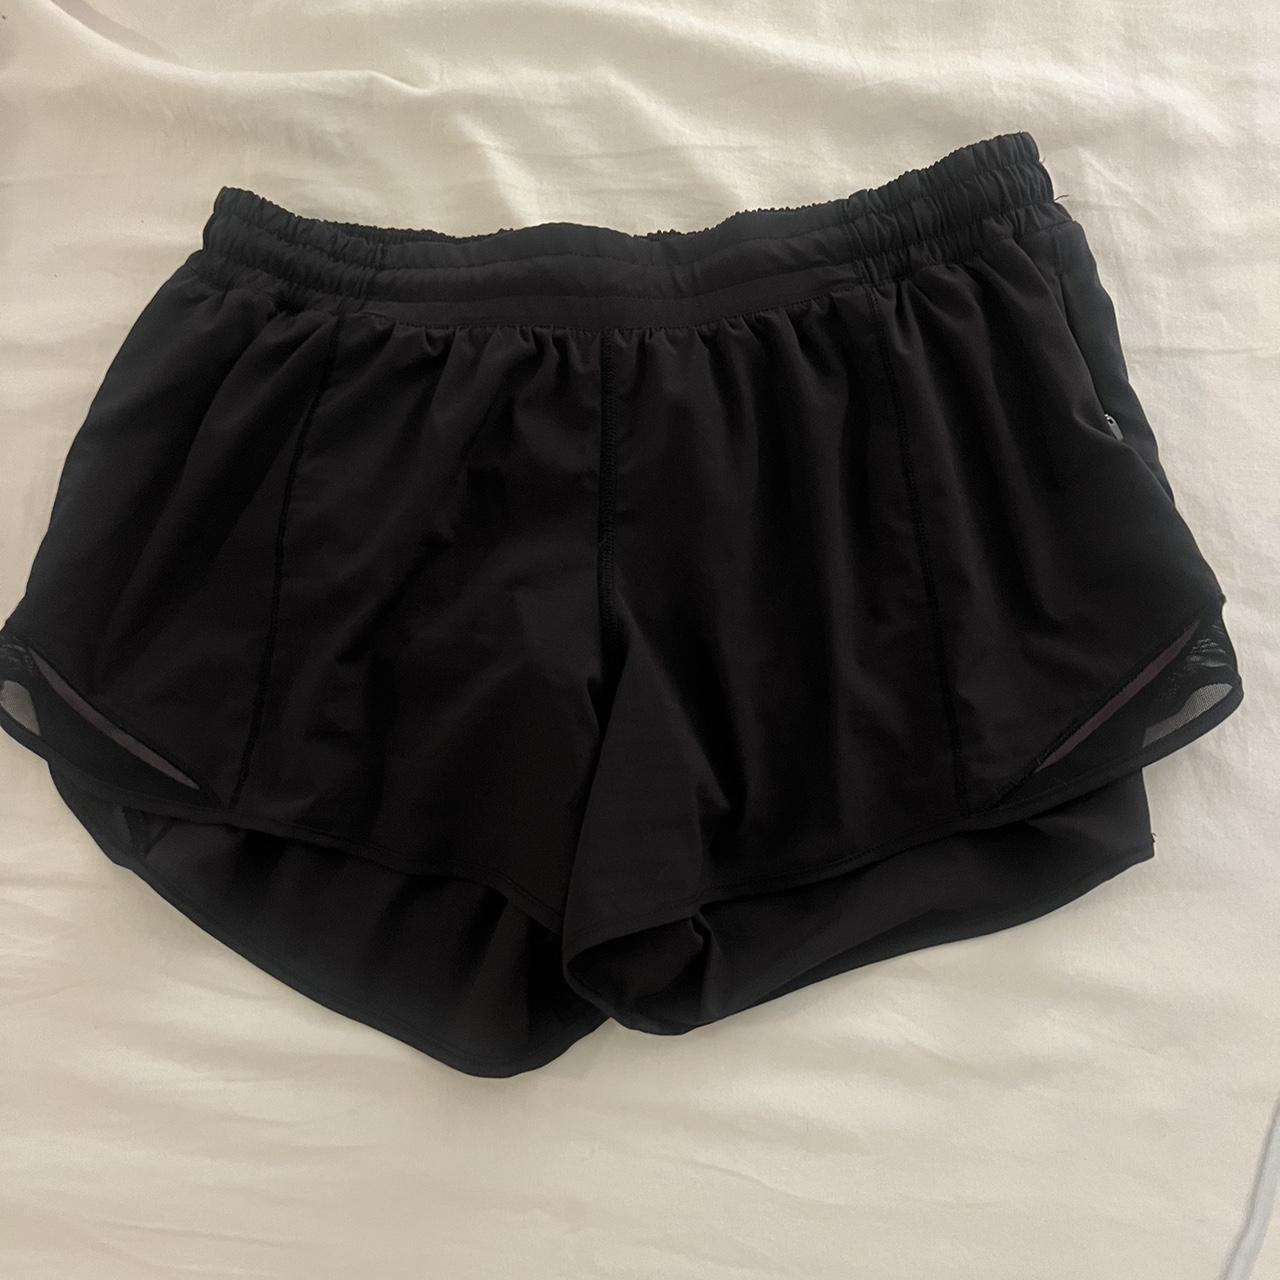 Lululemon shorts - Depop